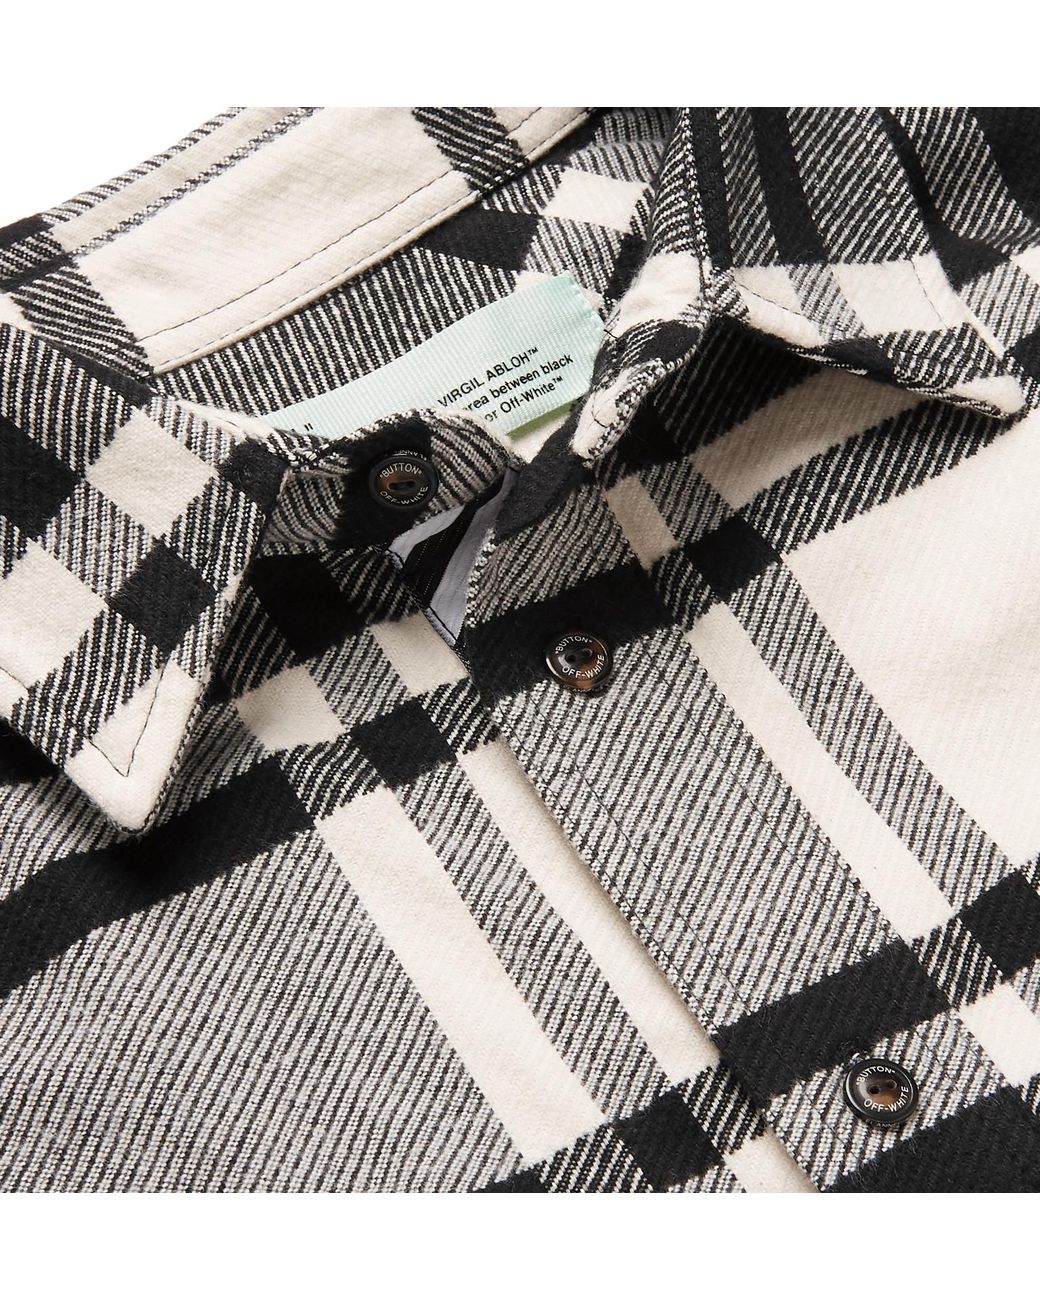 Stencil Flannel Check Shirt - Orange/Black  Checked flannel shirt, White  c, Check shirt